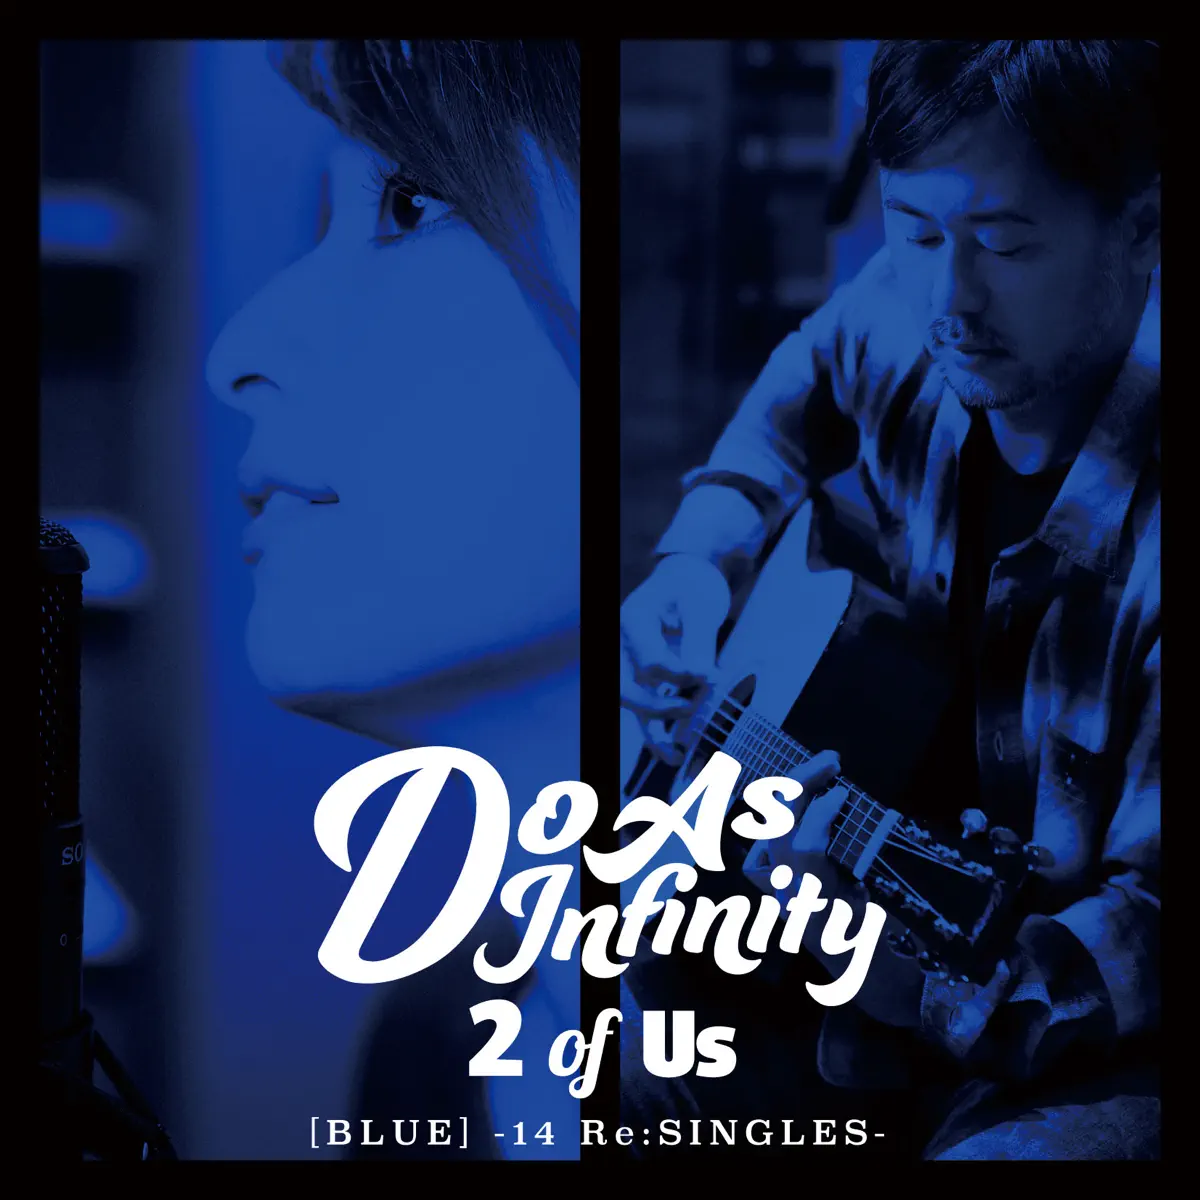 大无限乐团 Do As Infinity - 2 of Us [Blue] - 14 Re:Singles (2016) [iTunes Plus AAC M4A]-新房子